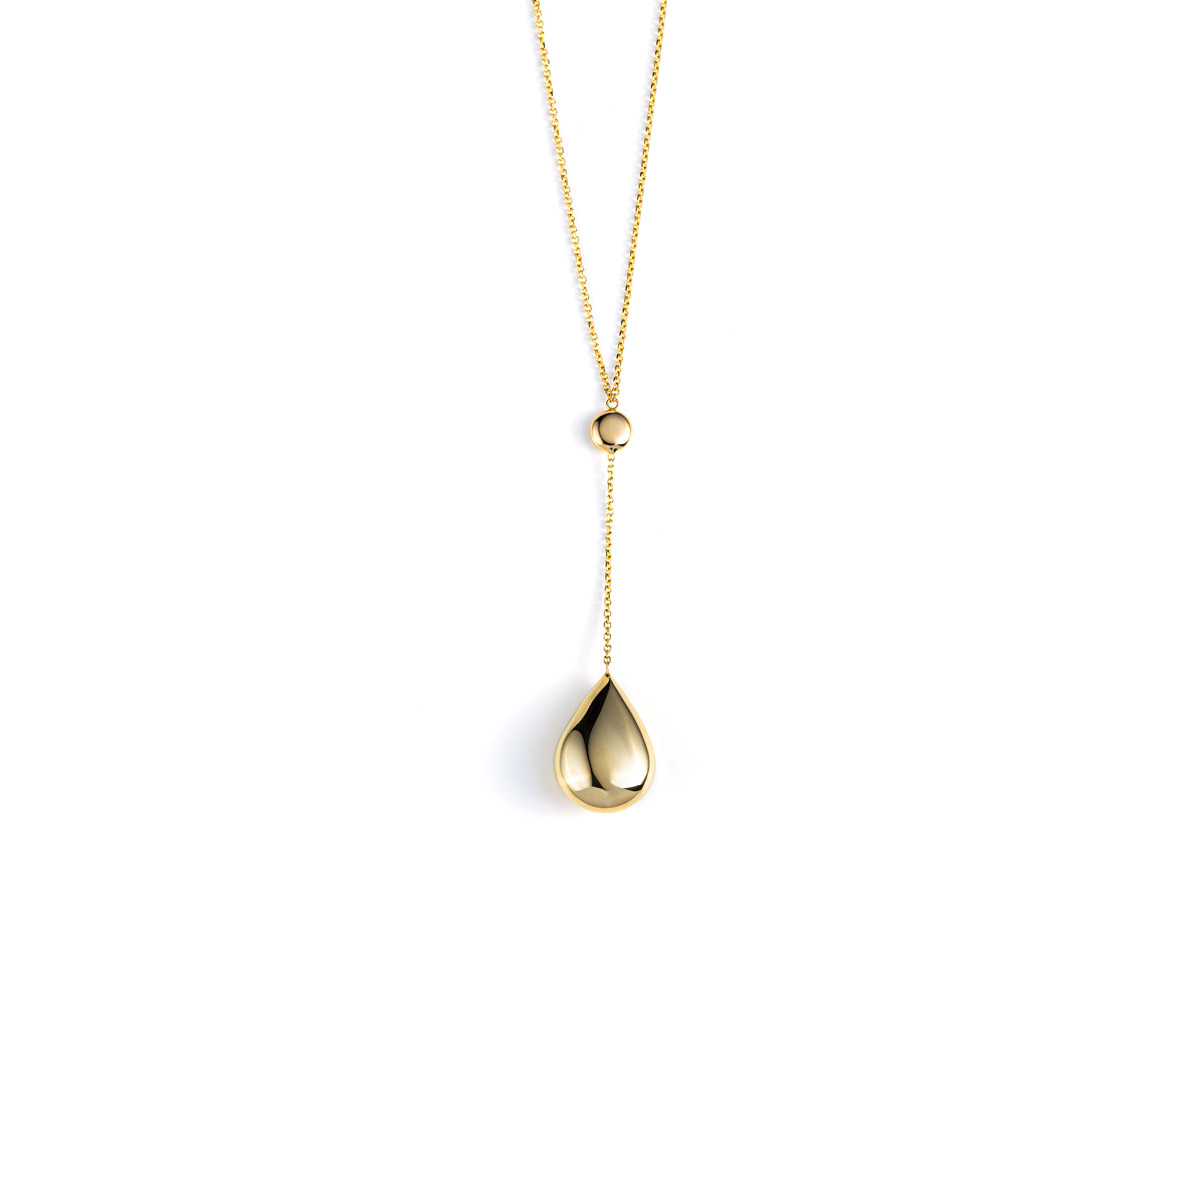 Tear Drop Necklace - 14K Gold